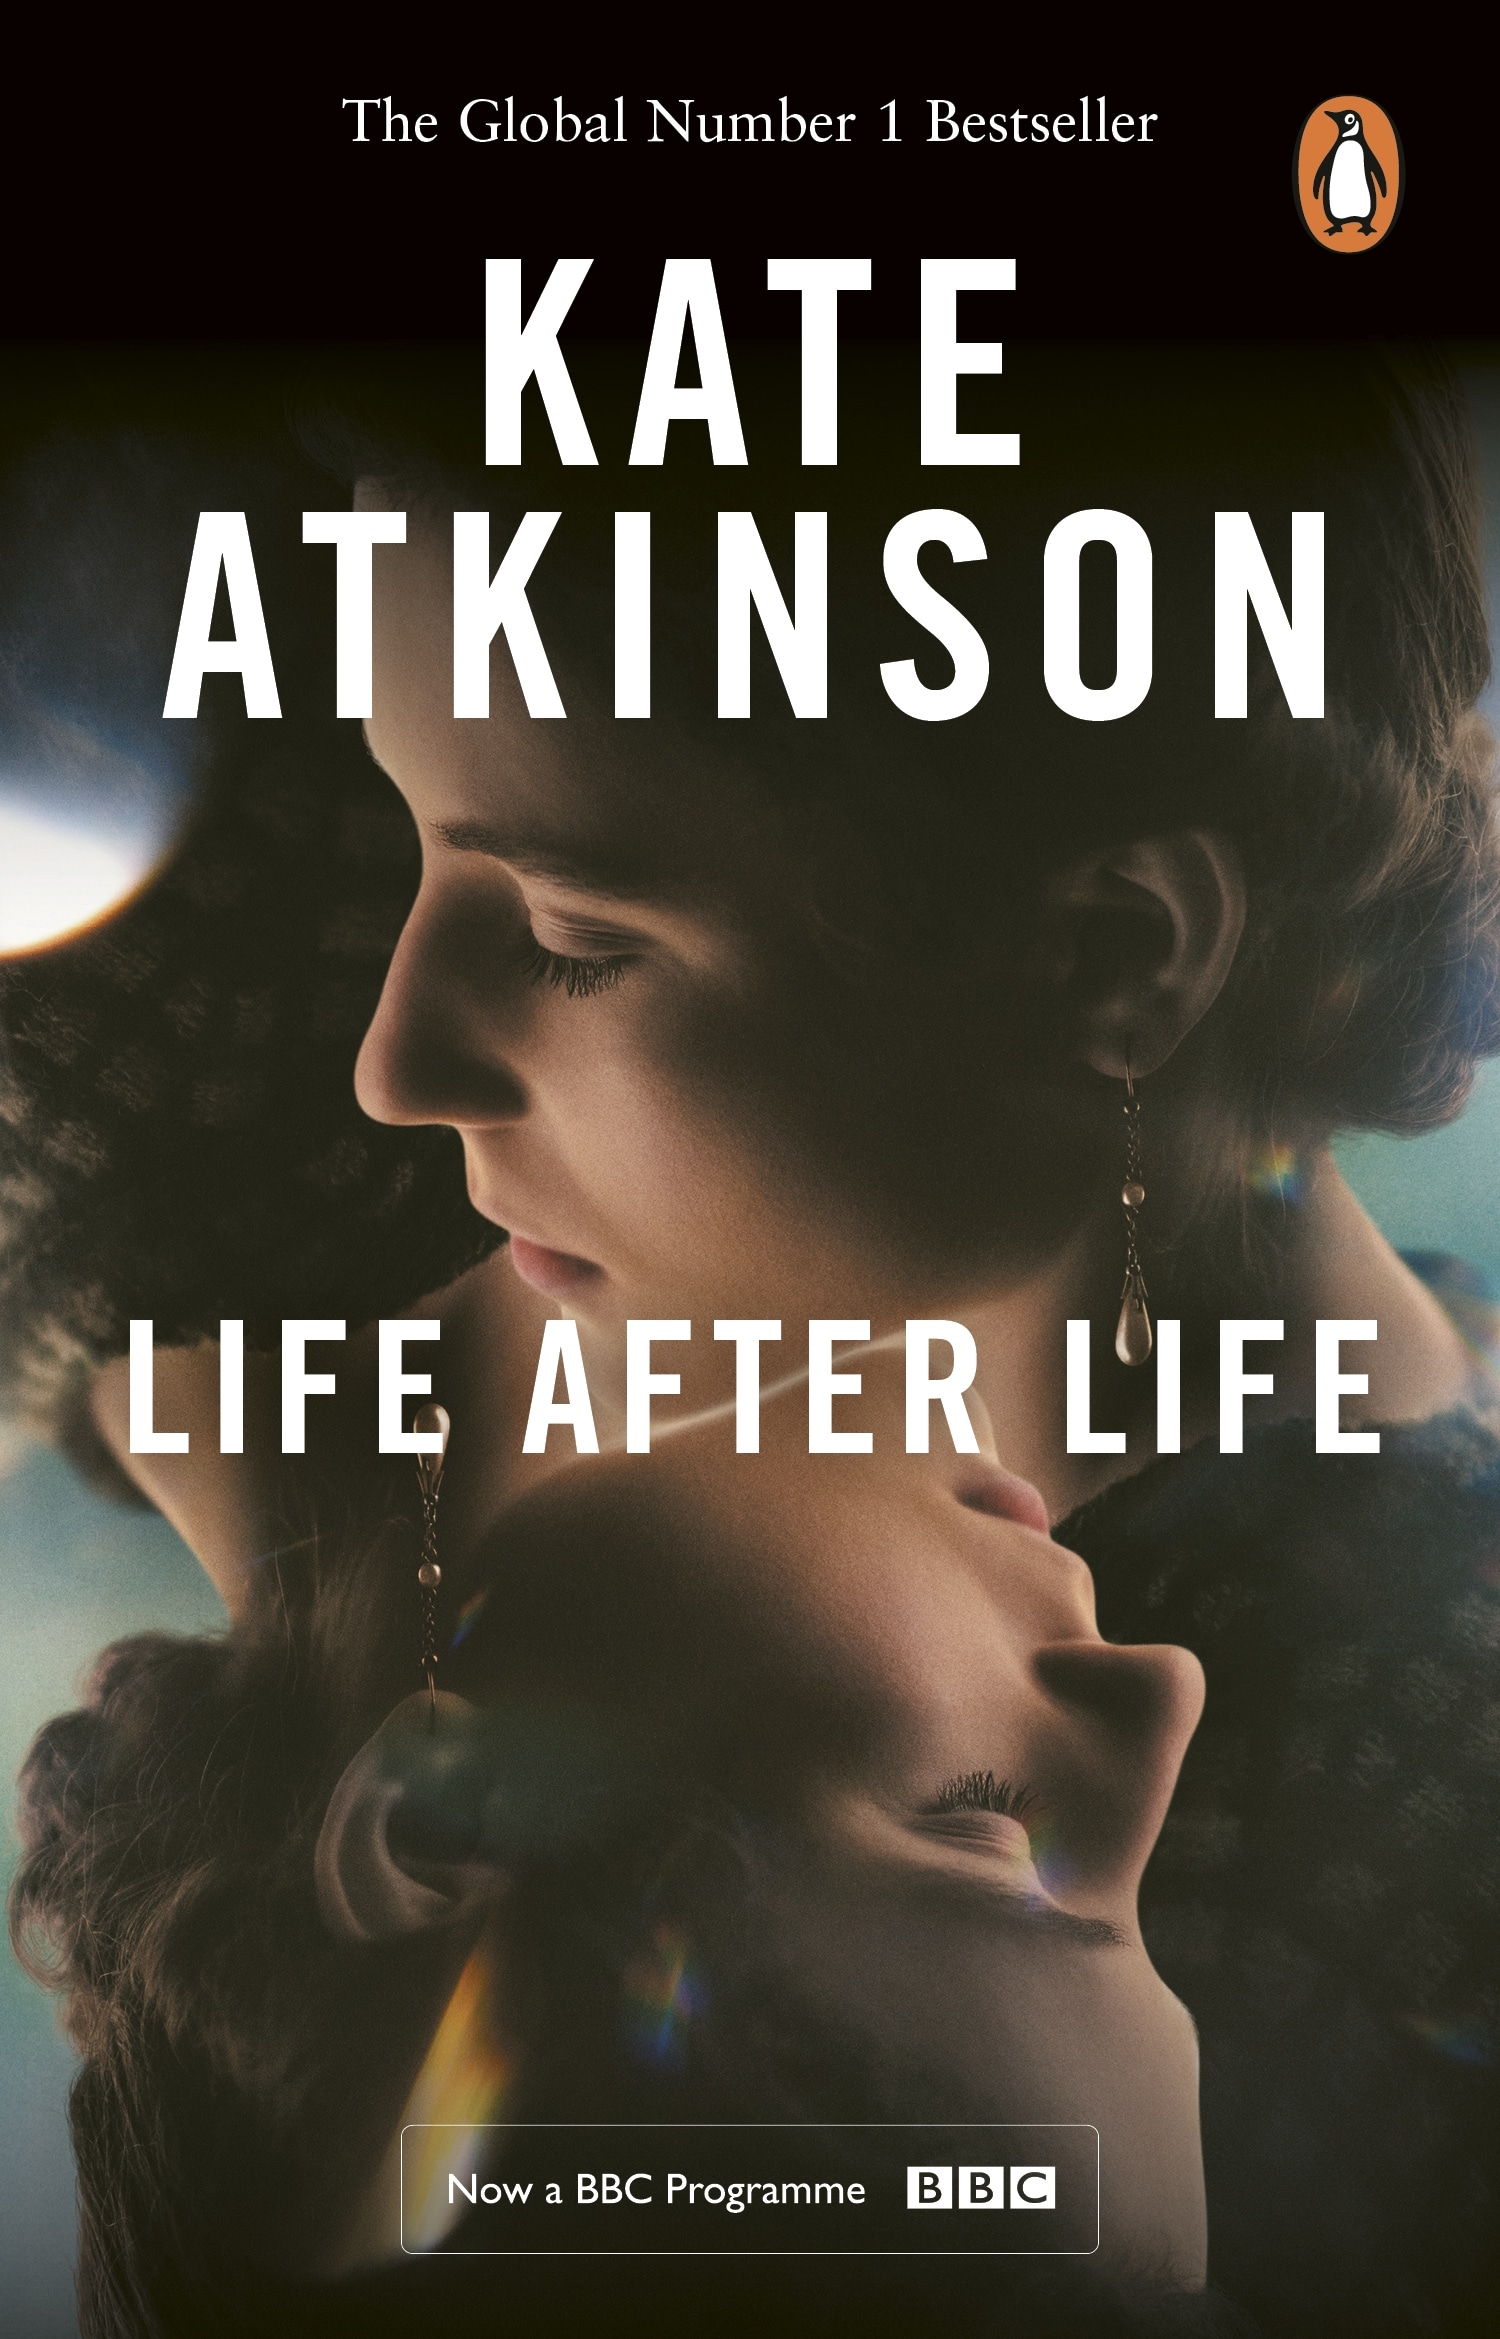 Book “Life After Life” by Kate Atkinson — April 14, 2022